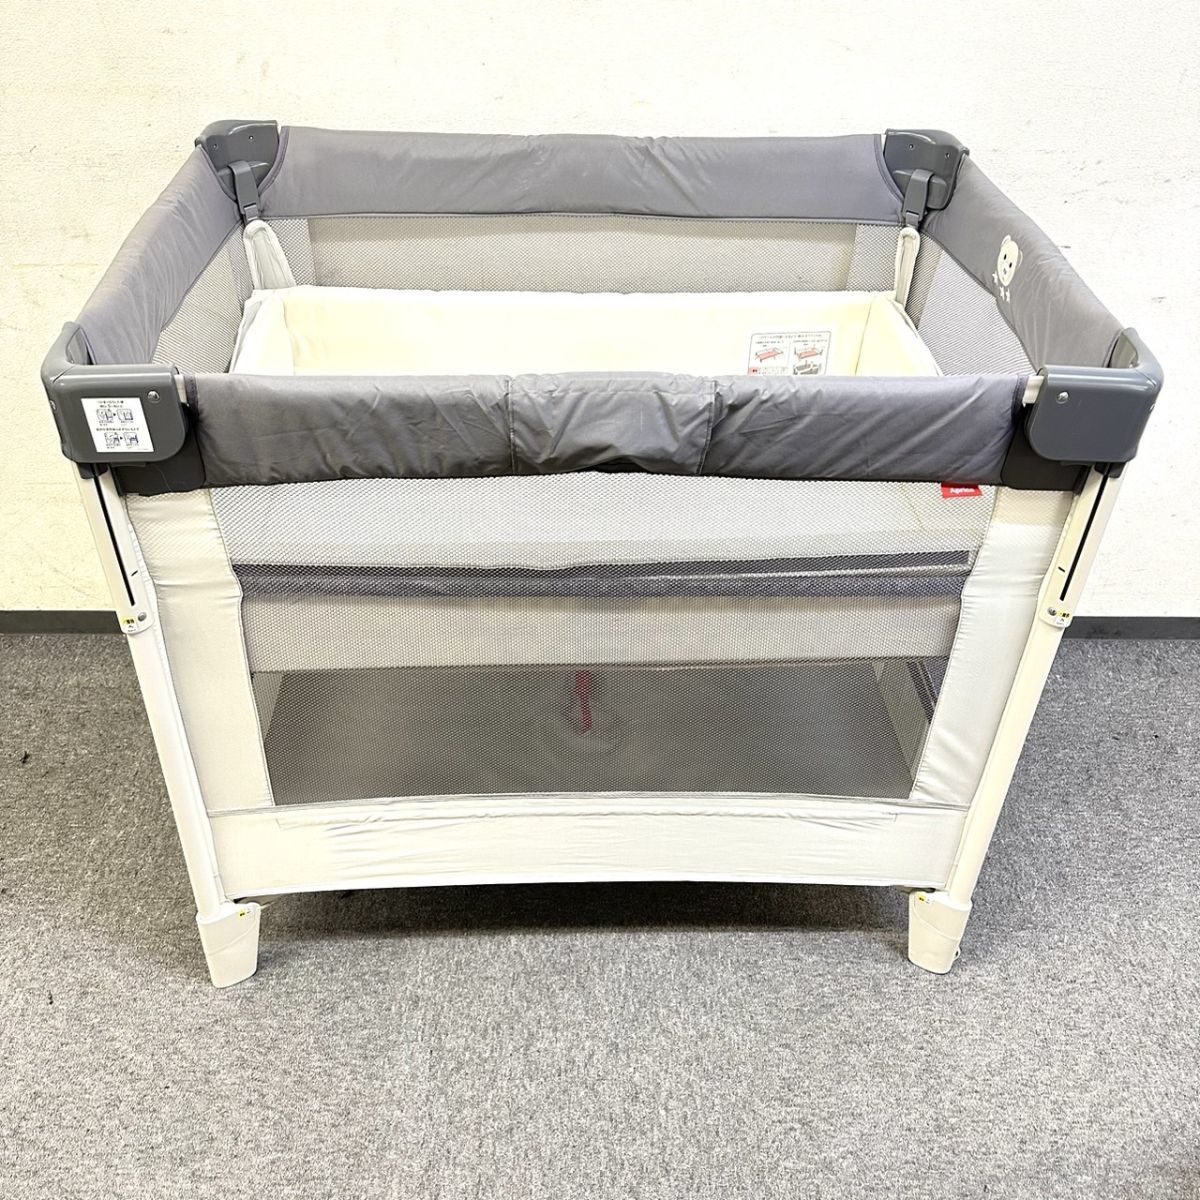 X602-I43-2296 Aprica アップリカ ベビーベッド ココネルエアー 折り畳み式 新生児 24ヶ月 乳幼児1人用ベッド ベビー家具 説明書付き_画像2